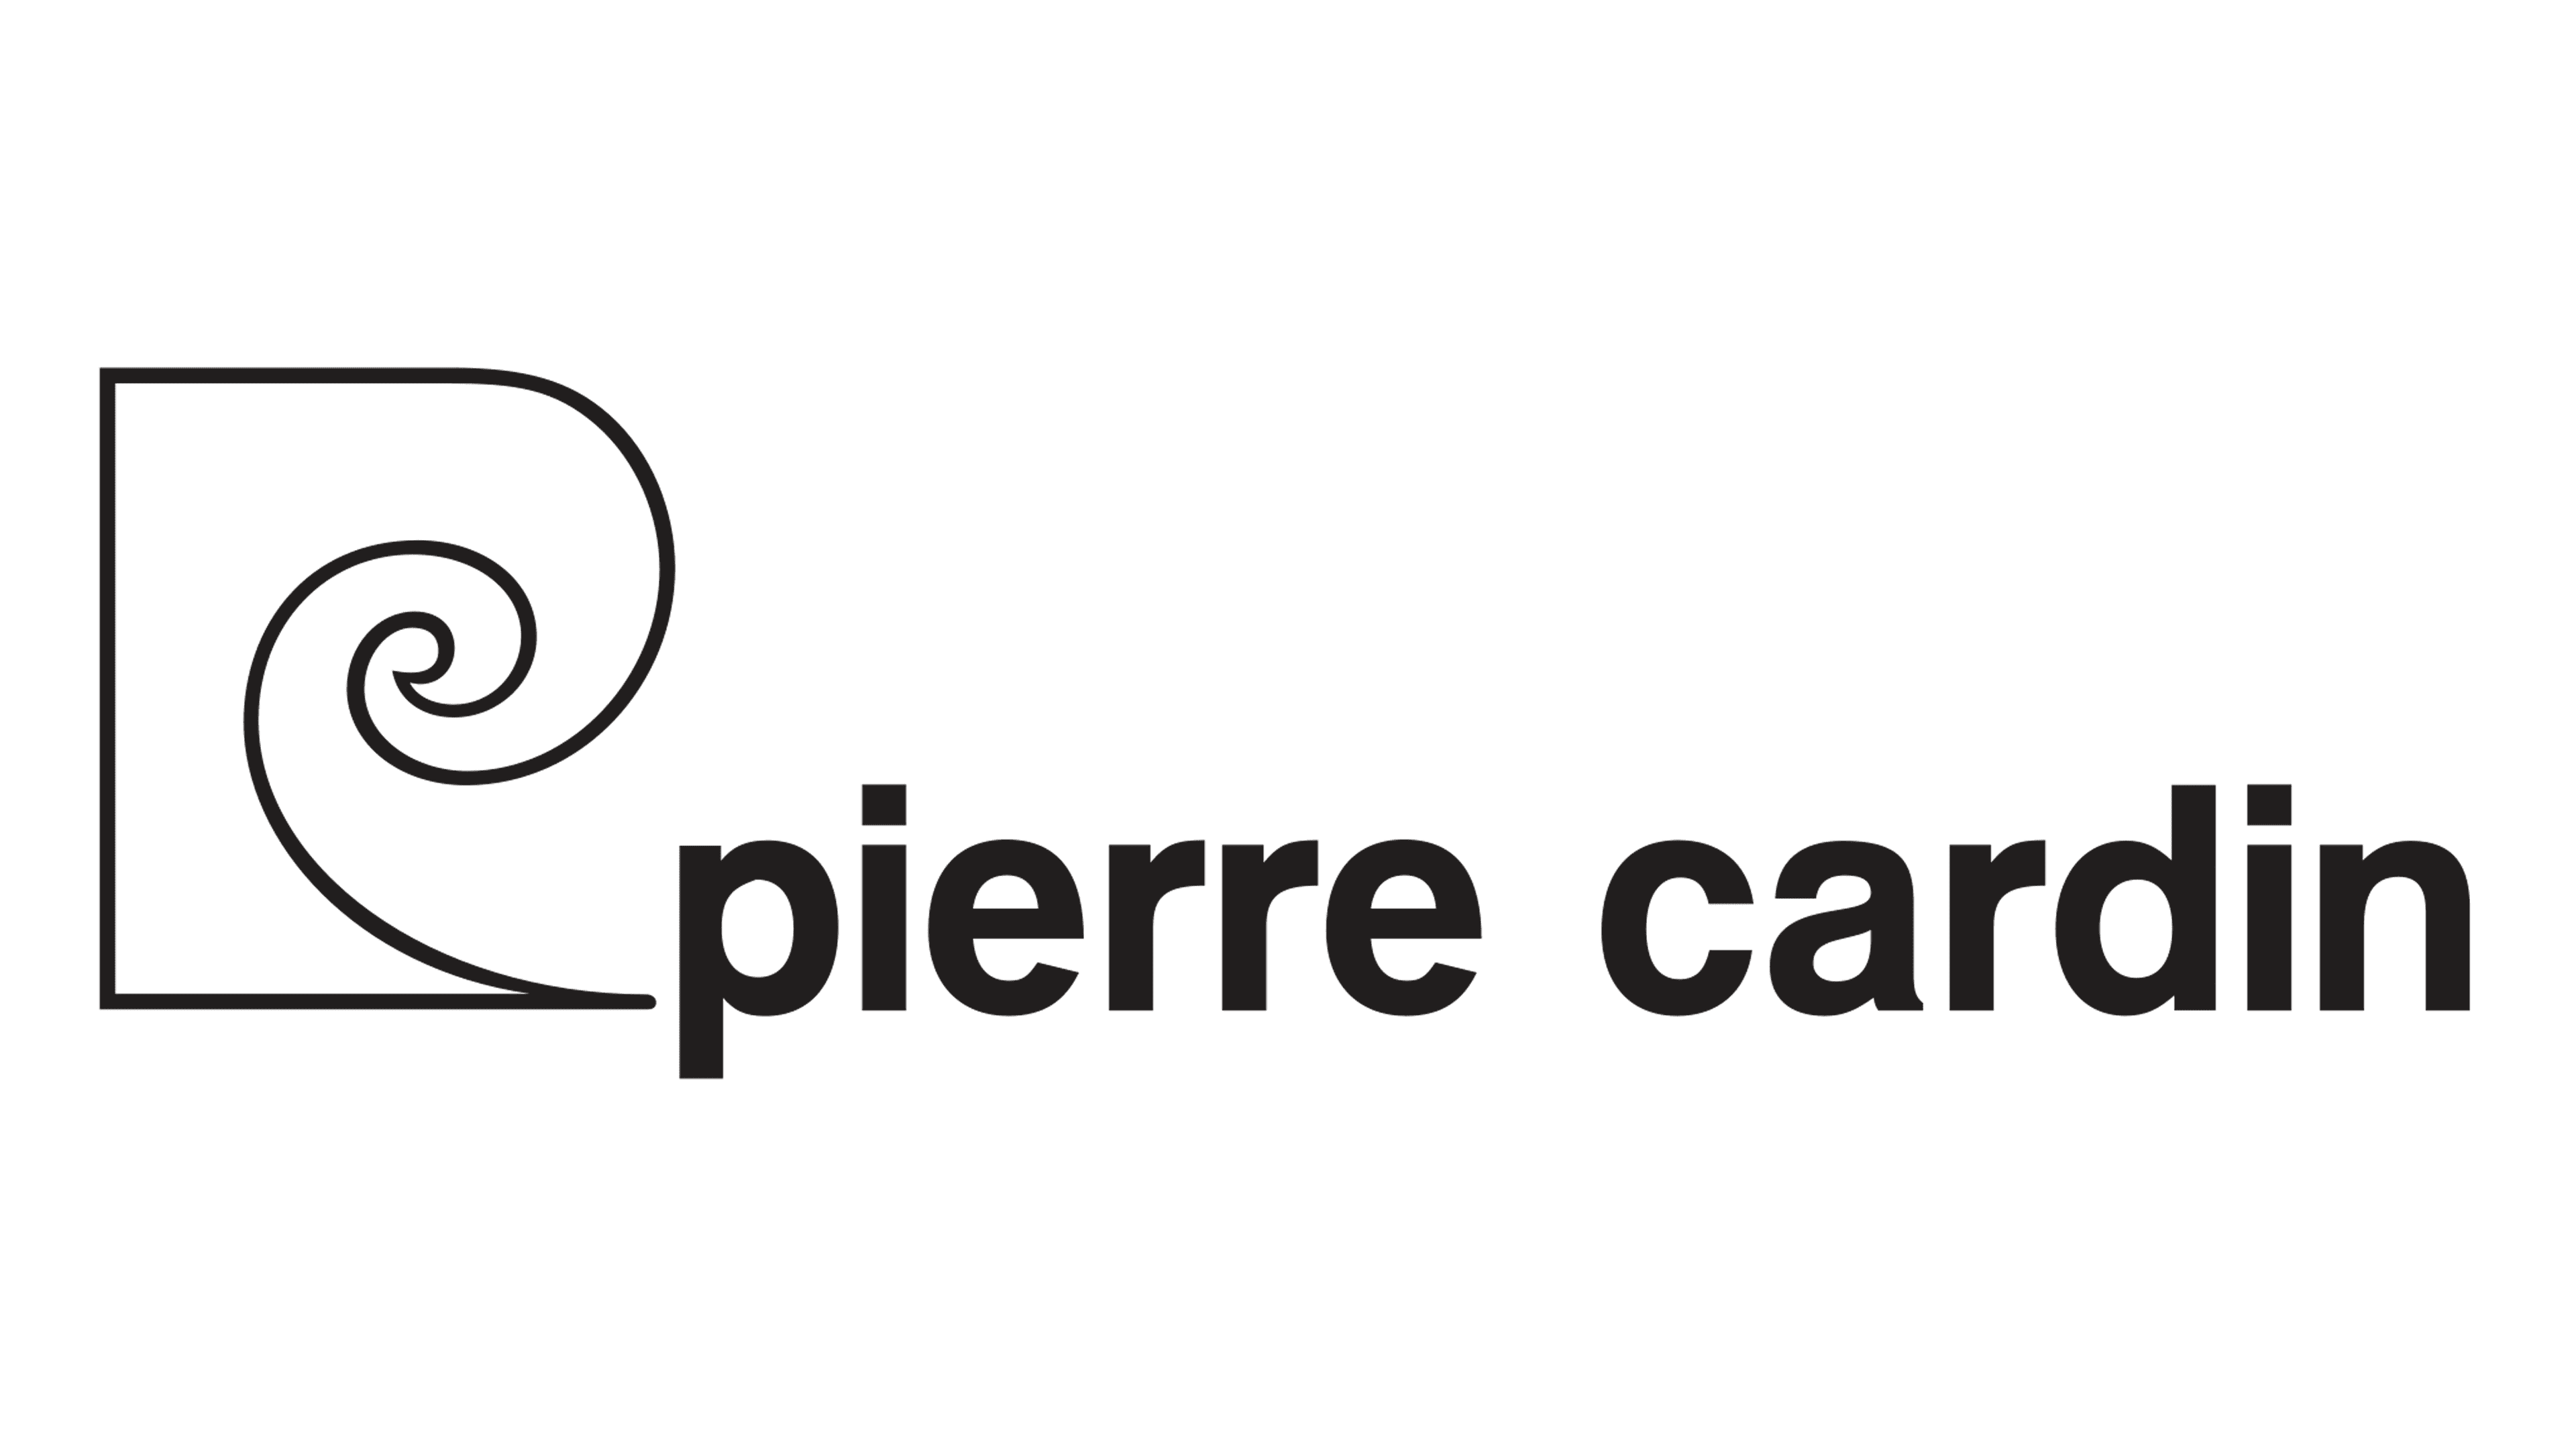 Pierre Cardin - پیر کاردین